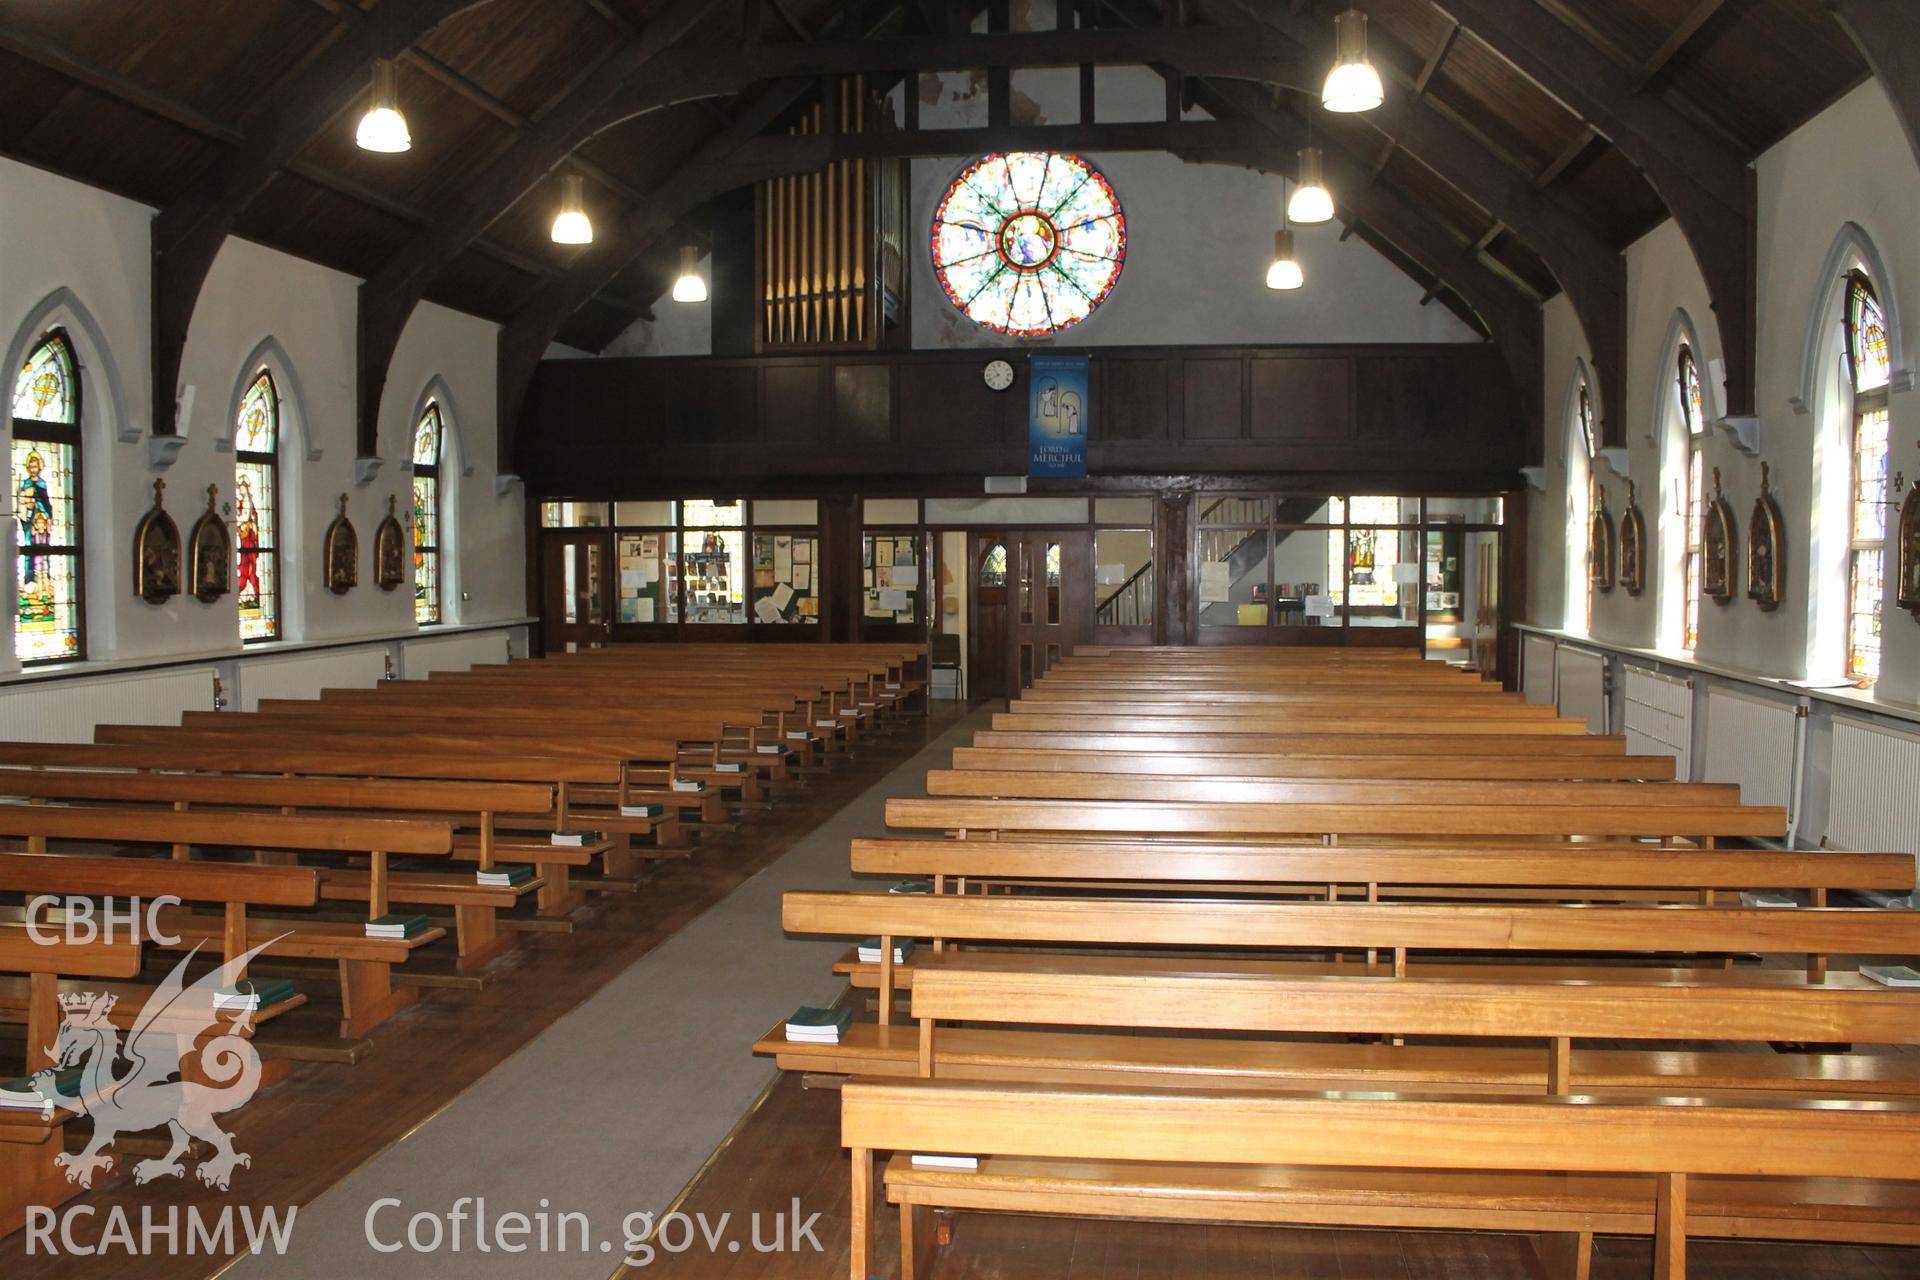 Digital colour photograph showing the interior of St Joseph's Catholic church, Neath.